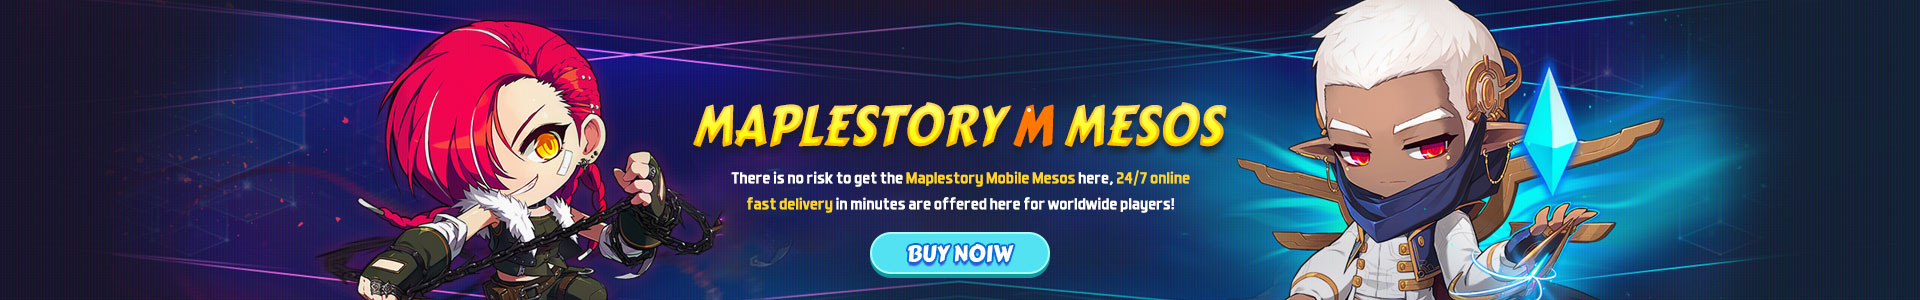 Maplestory M Mesos